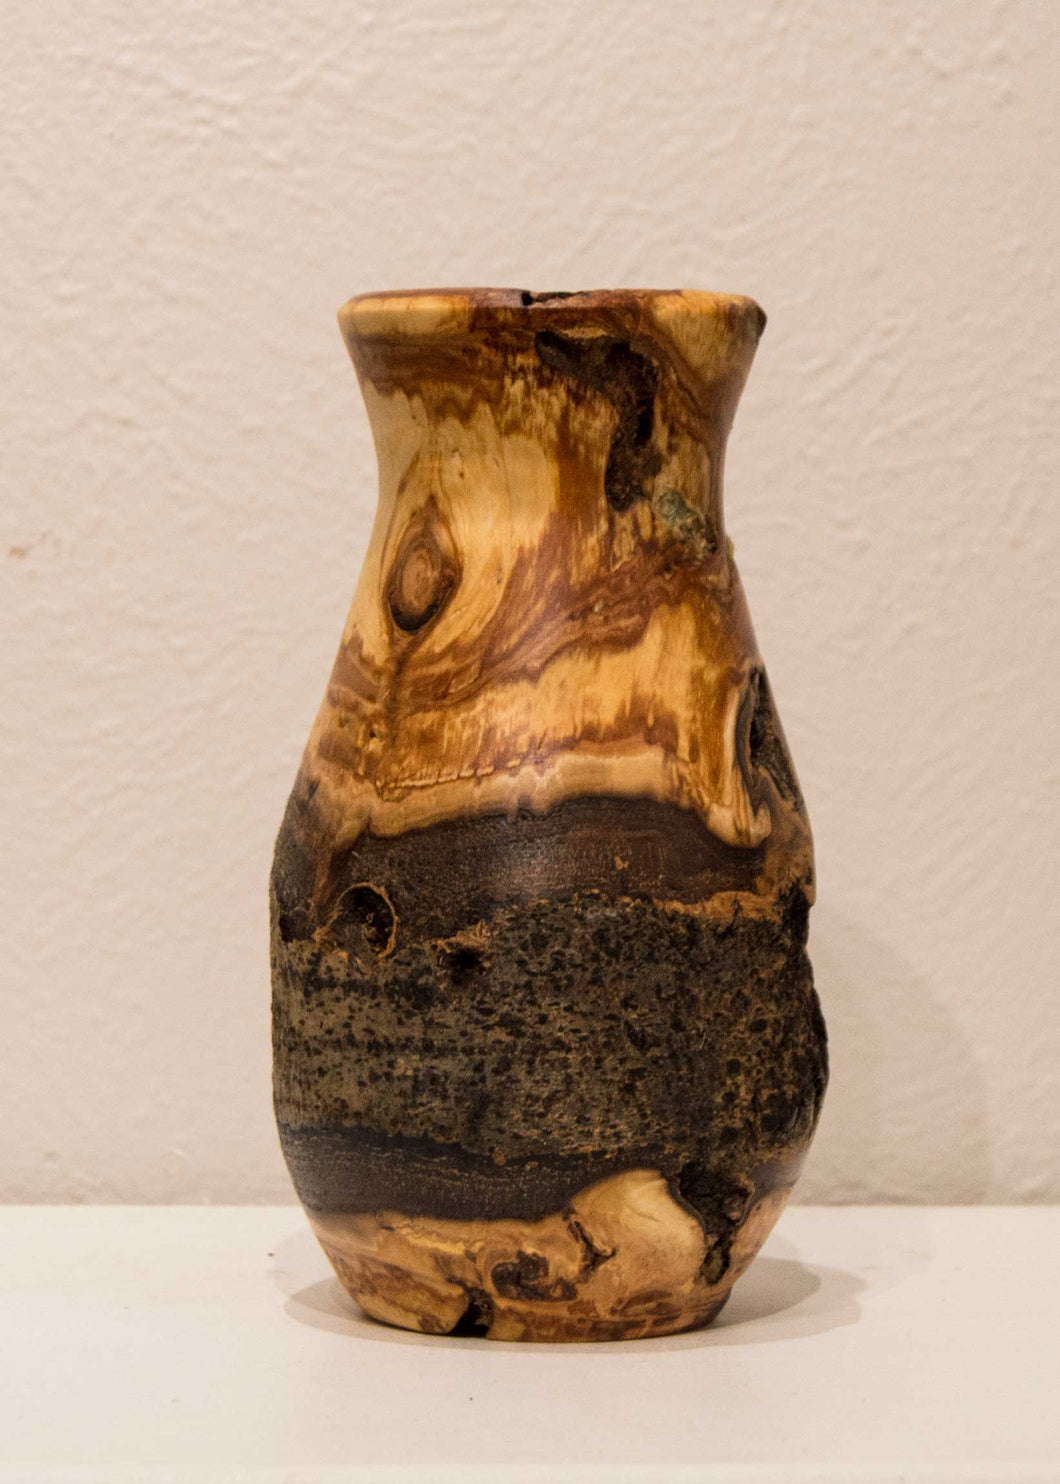 Pine Vase (52) Joseph Thompson, Woodcarving